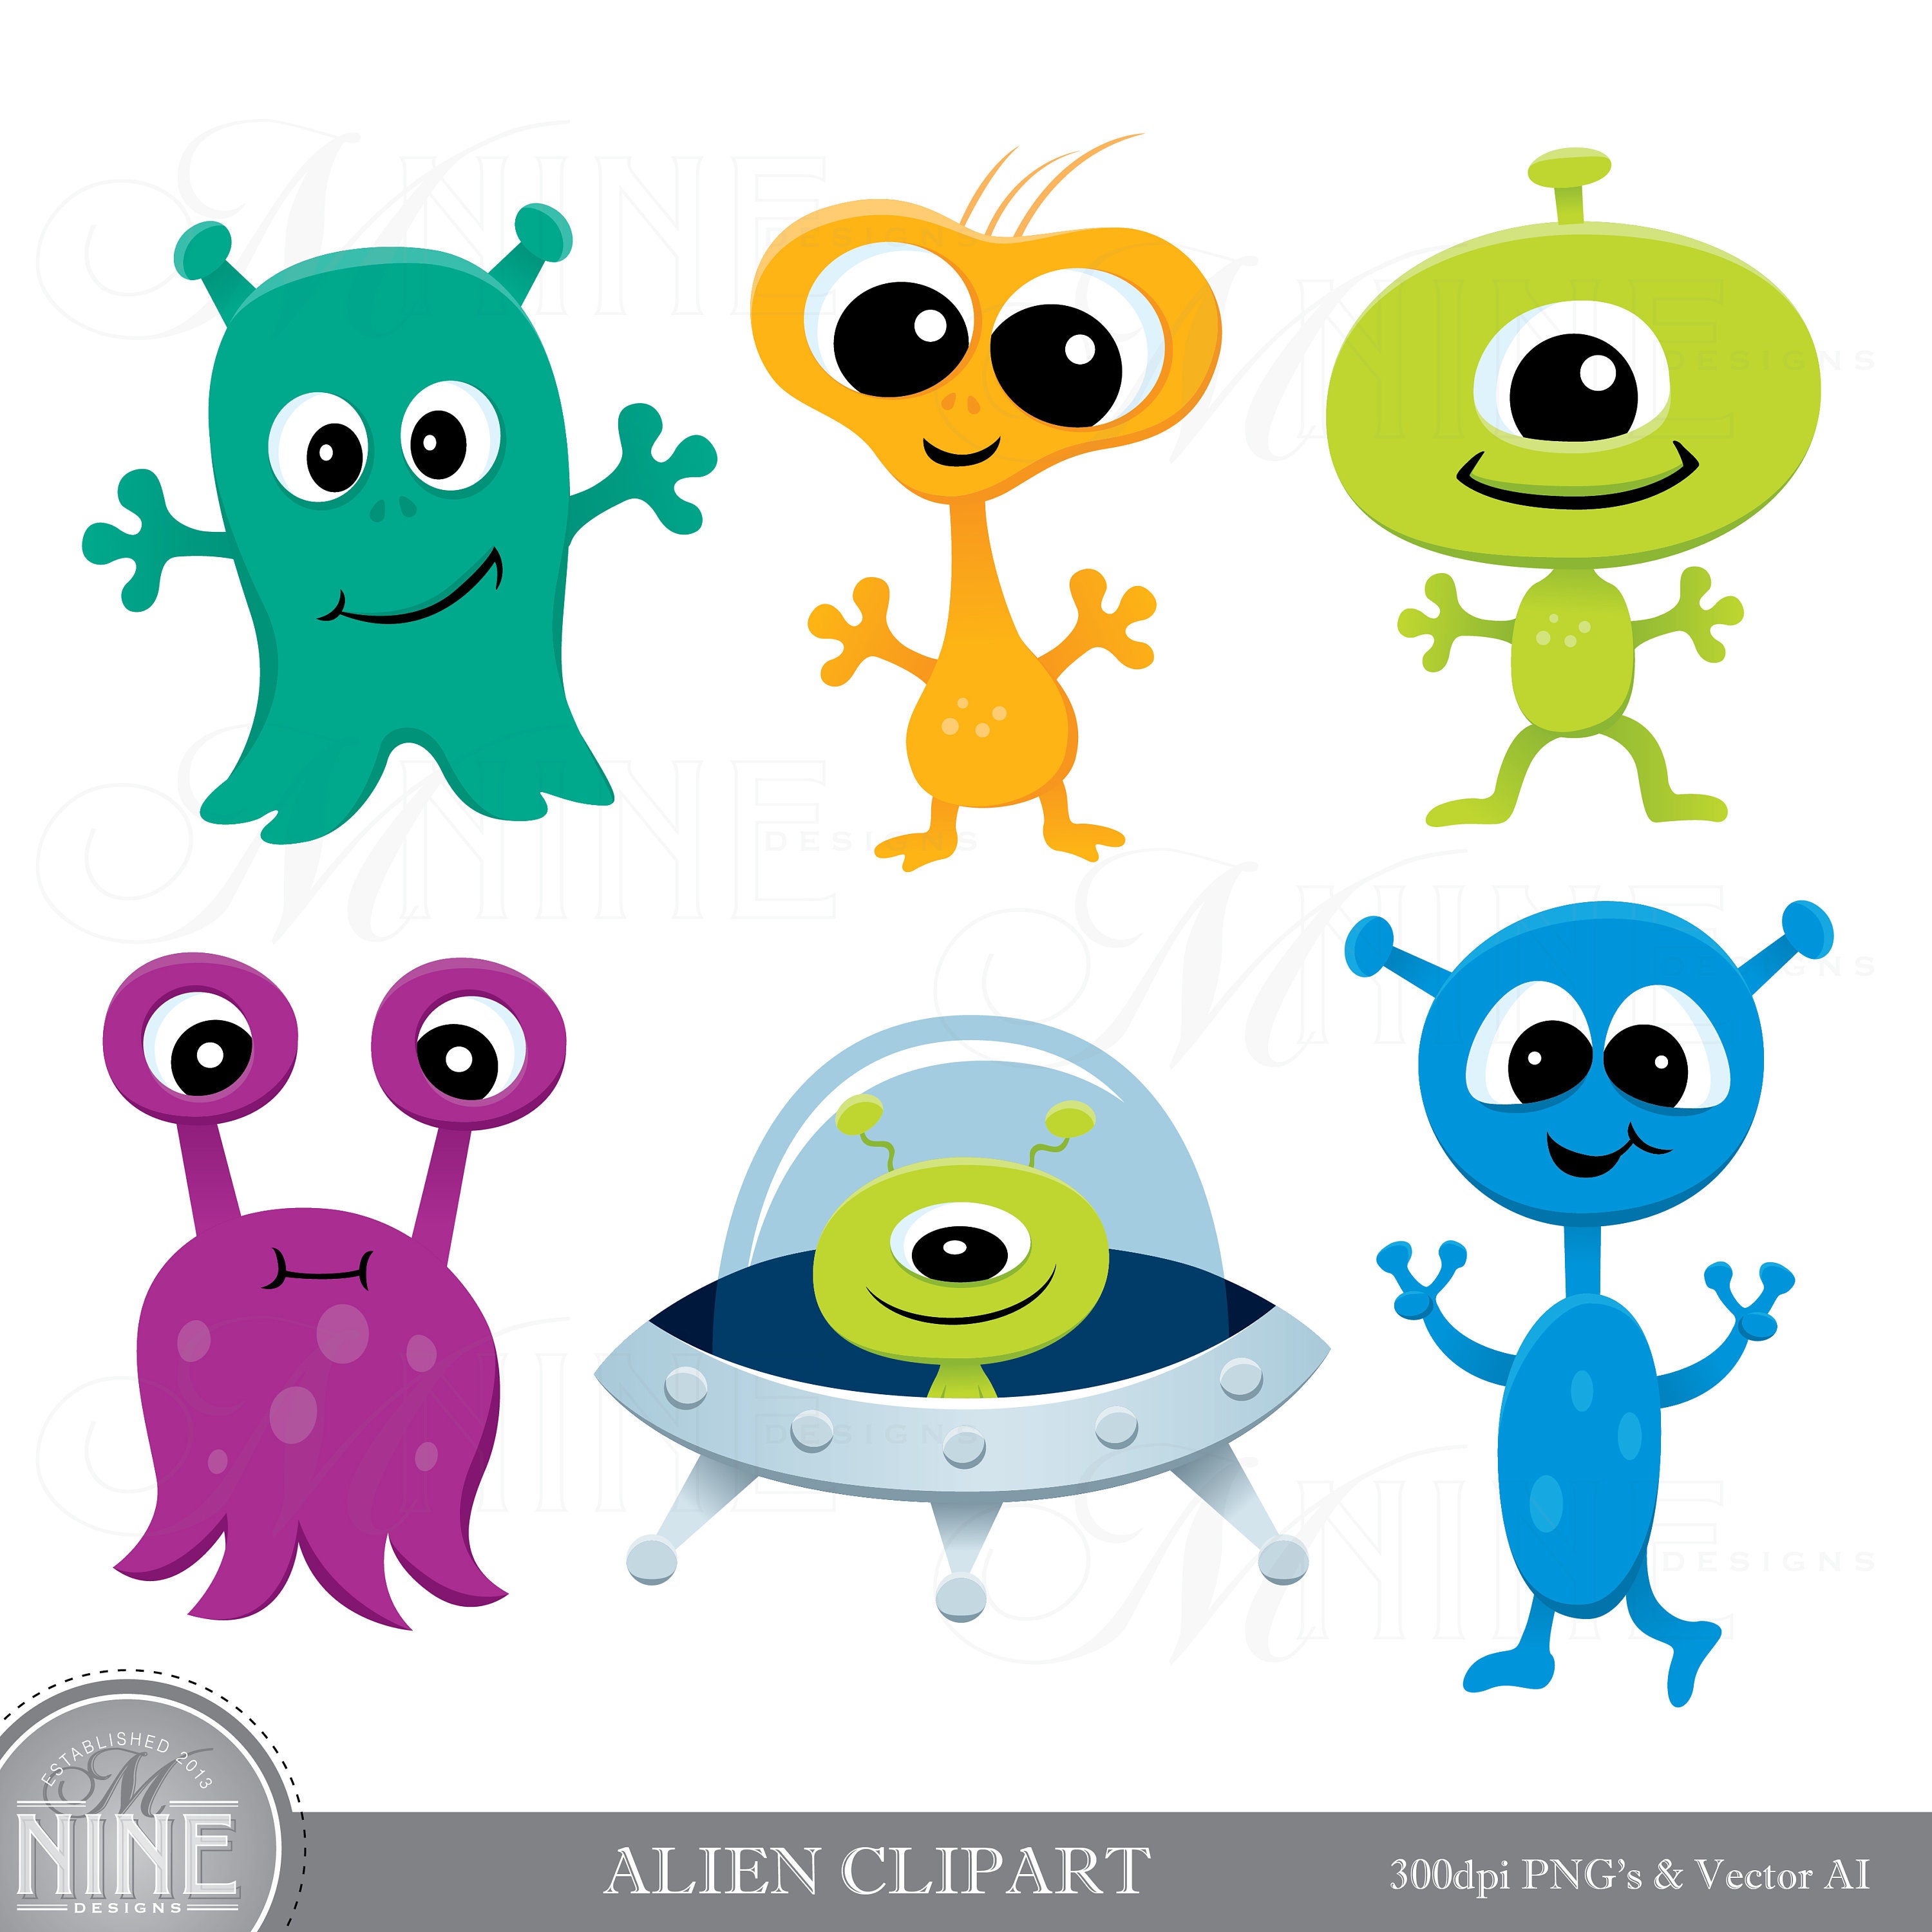 ALIEN Clip Art Aliens Clipart Downloads Space Alien Party Downloads Cute  Alien Theme Spaceship Clipart Vector Aliens - Etsy